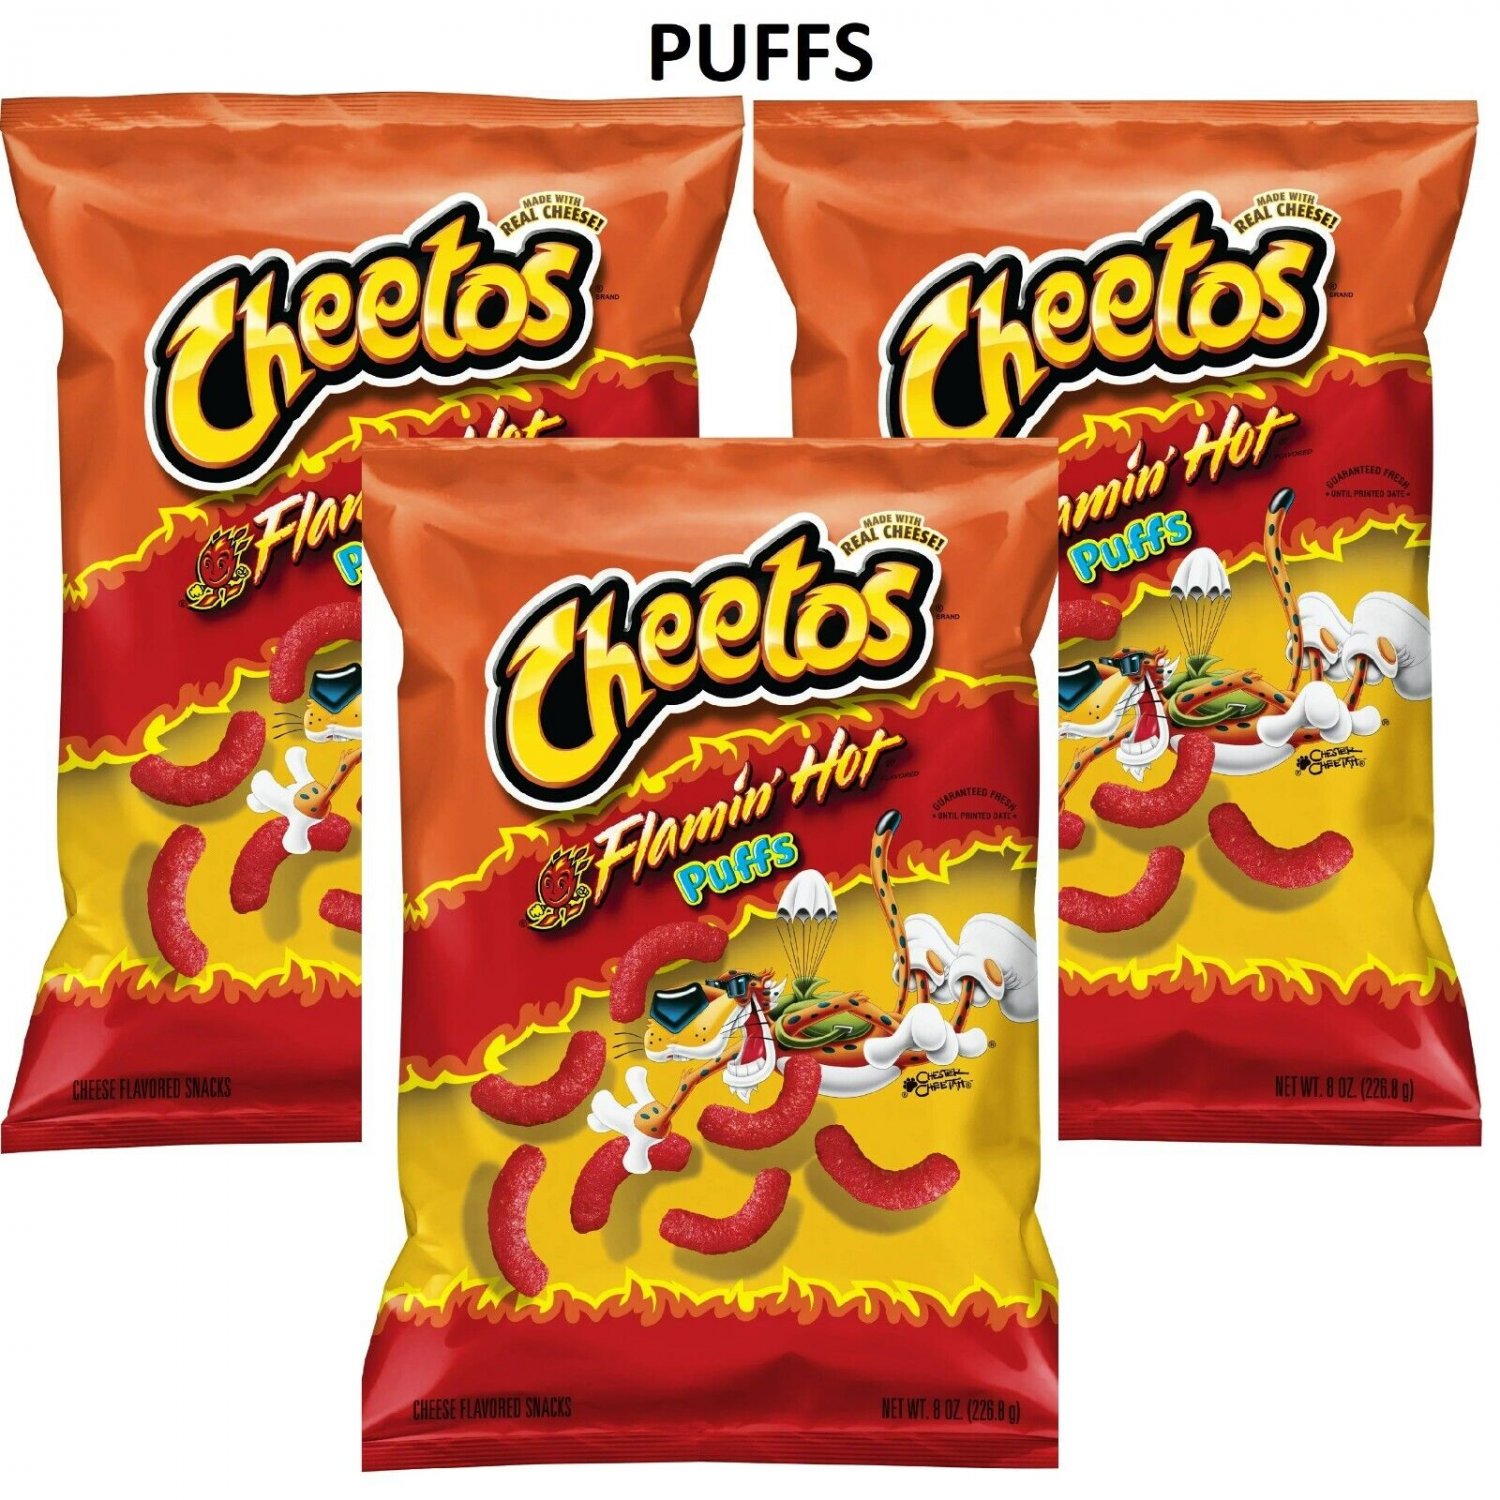 Cheetos Corn PUFFS FLAMIN' HOT Cheese Flavored Snacks 8oz - 3 Bags